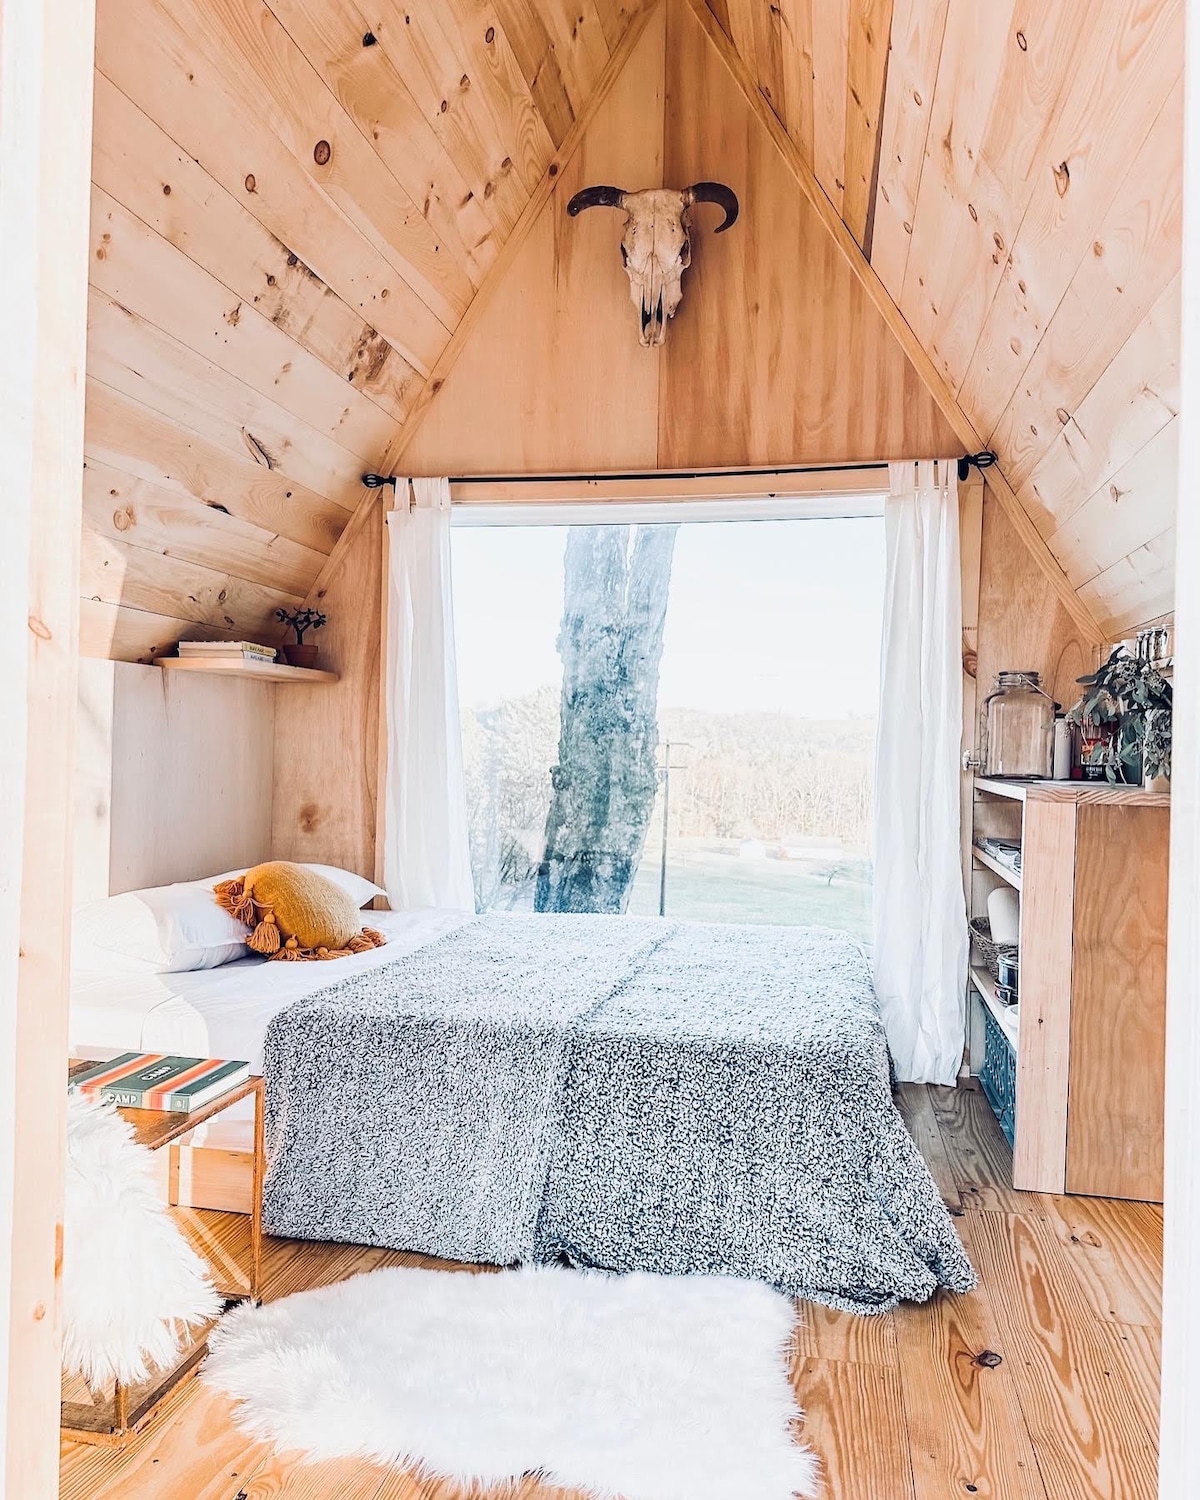 Tiny like “A” frame cabin with alpacas